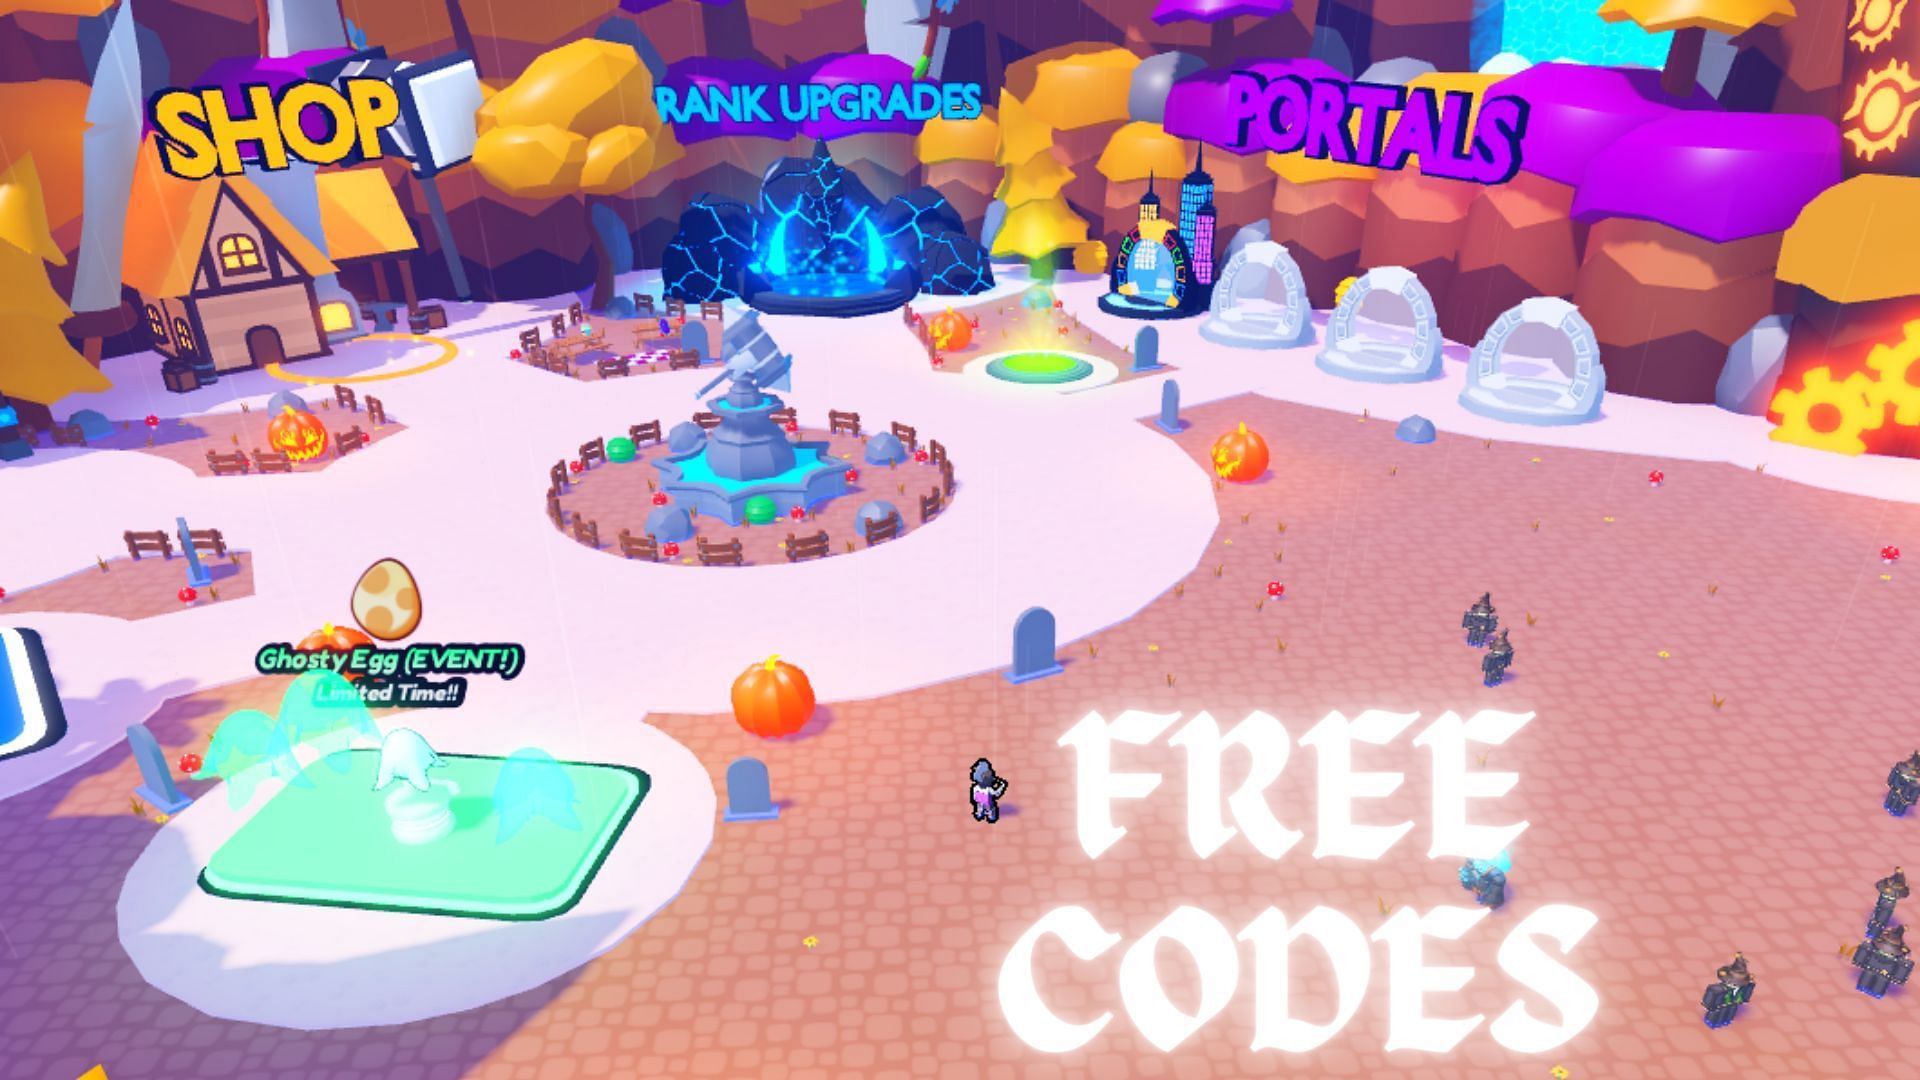 Free Active codes in Banning Simulator X (Image via Roblox || Sportskeeda)